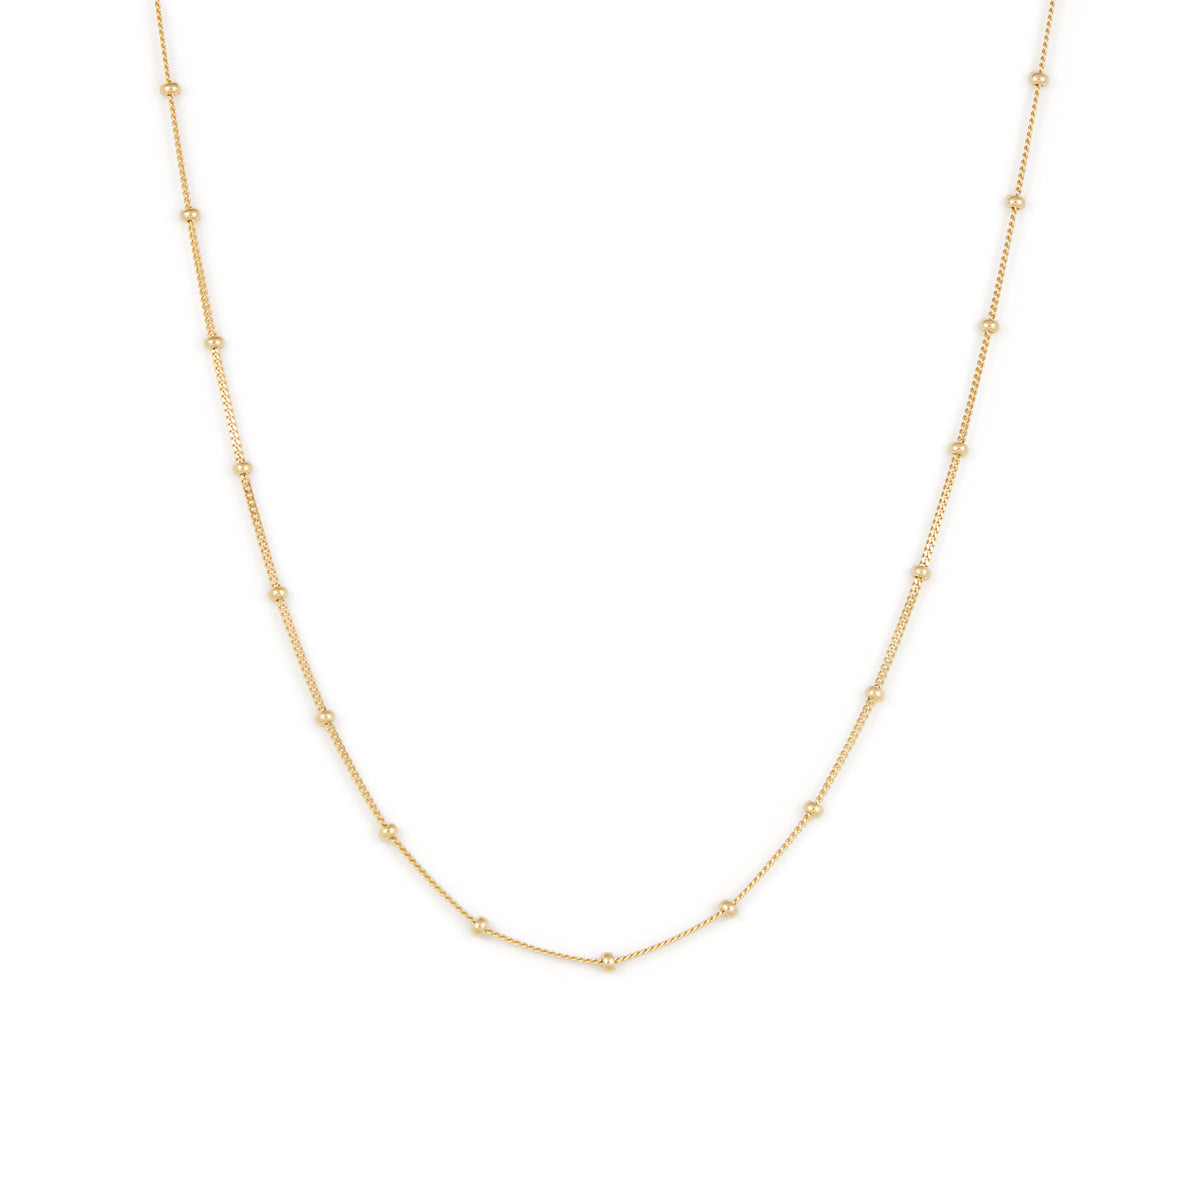 Satellite Necklace - 10 Karat Gold